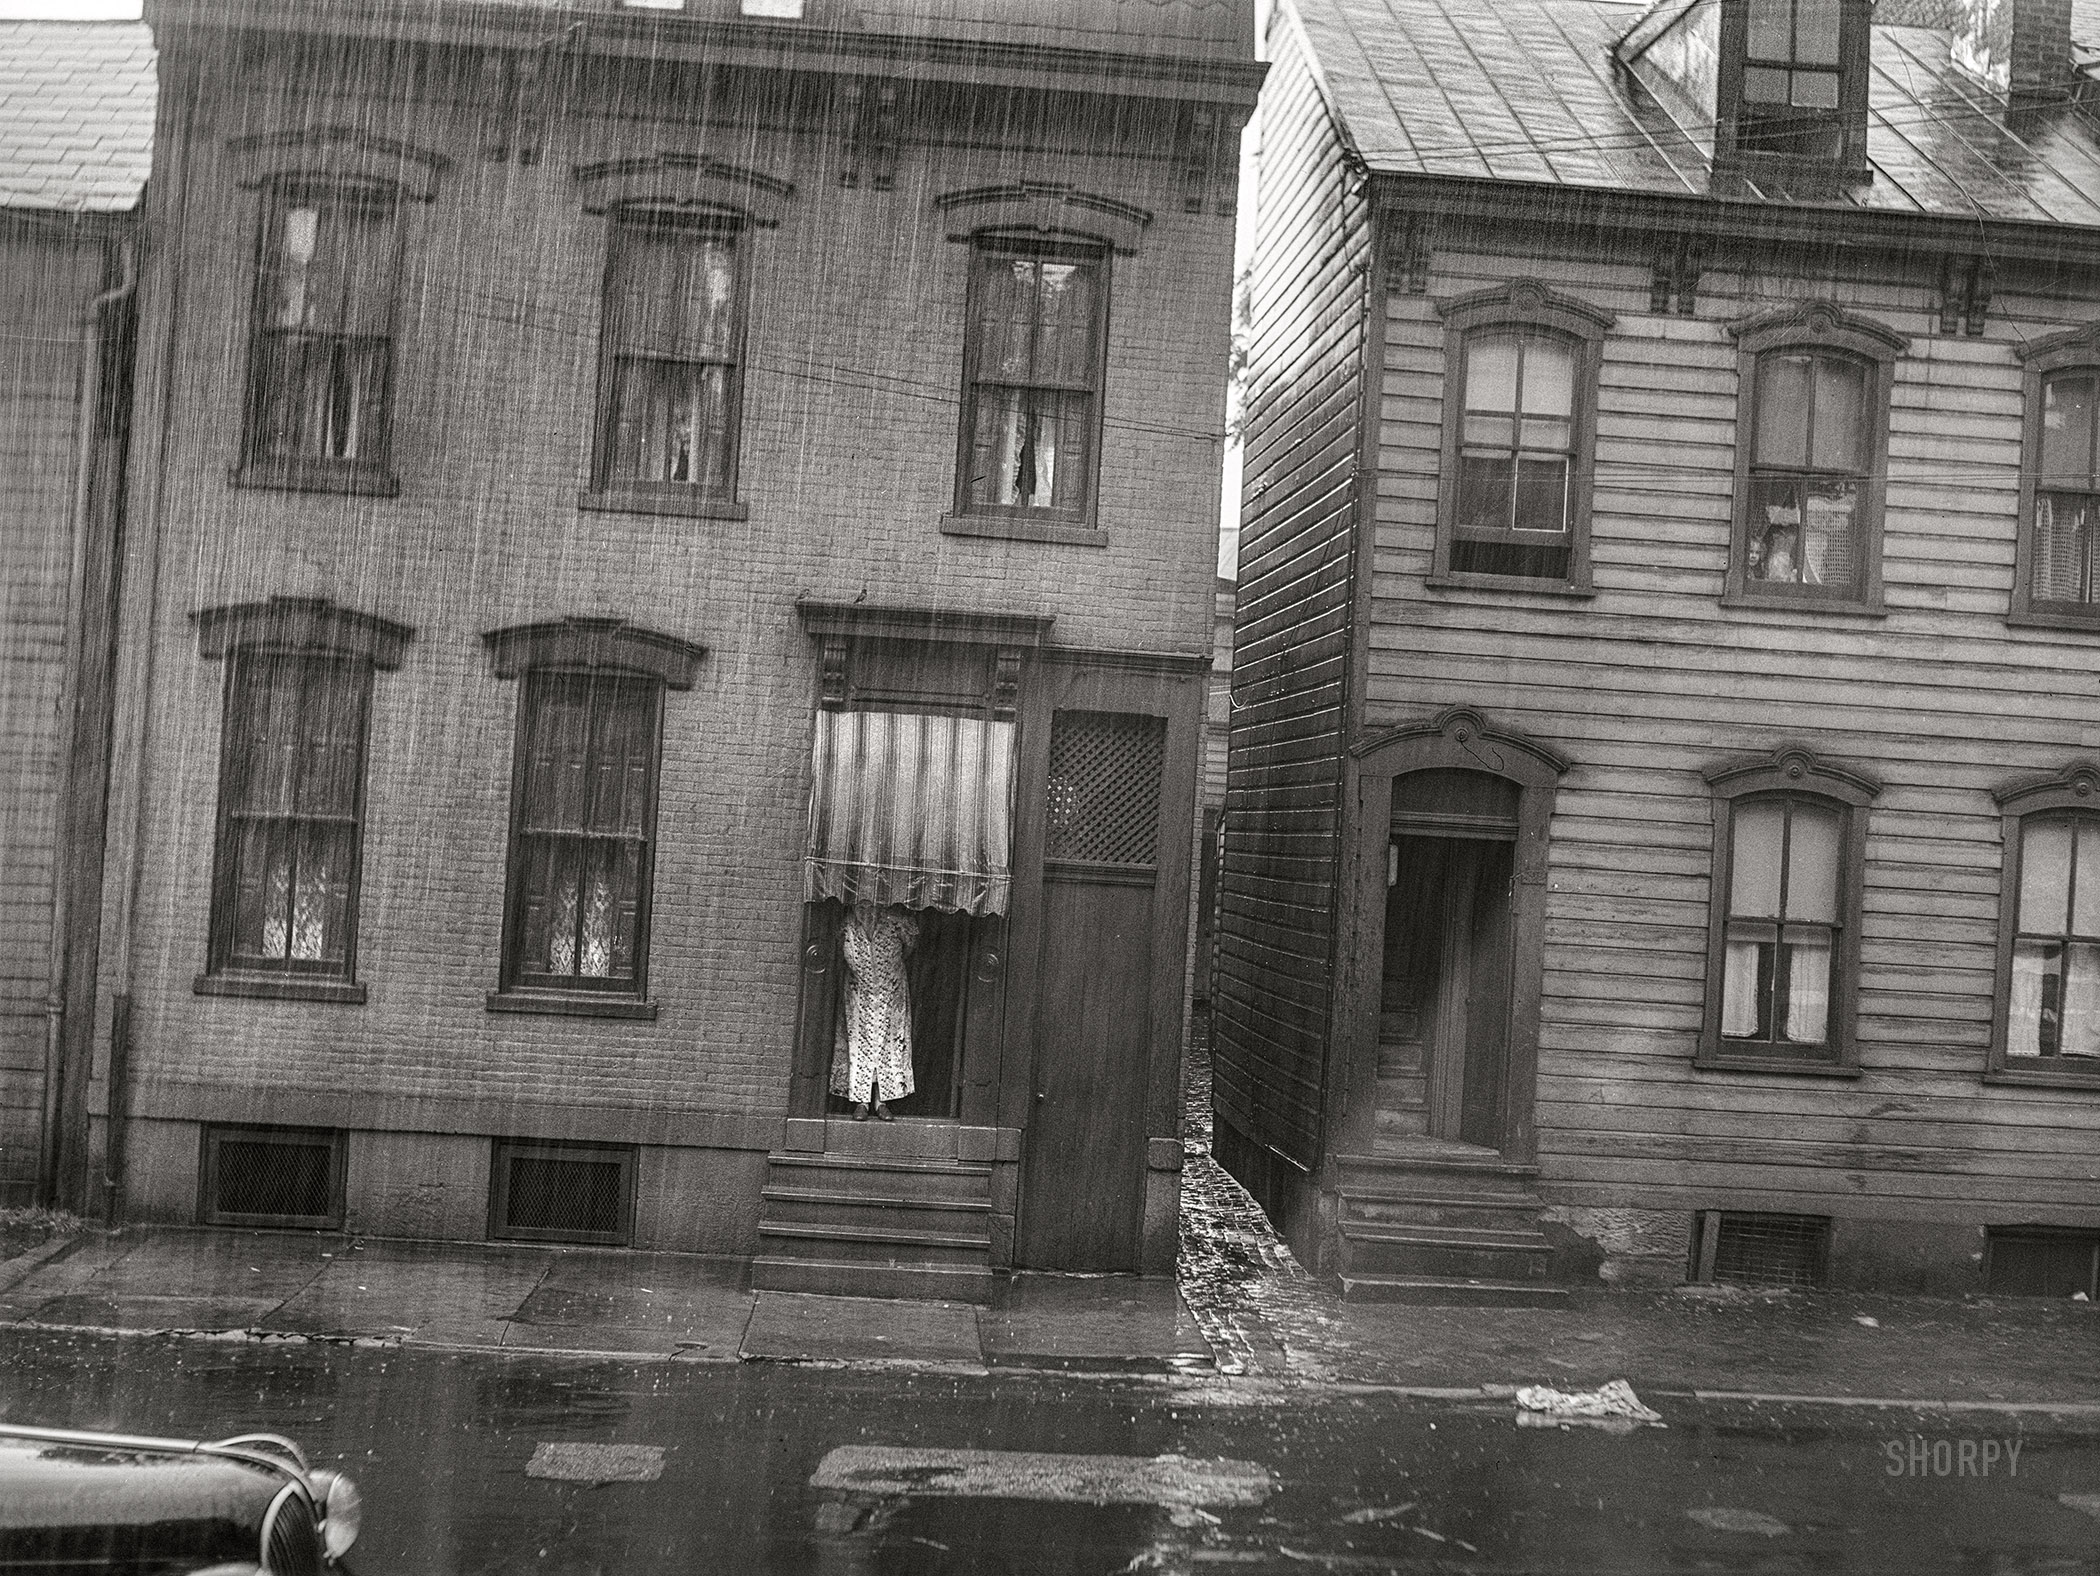 June 1941. "Rain. Pittsburgh, Pennsylvania." Medium format acetate negative by John Vachon for the Farm Security Administration. View full size.